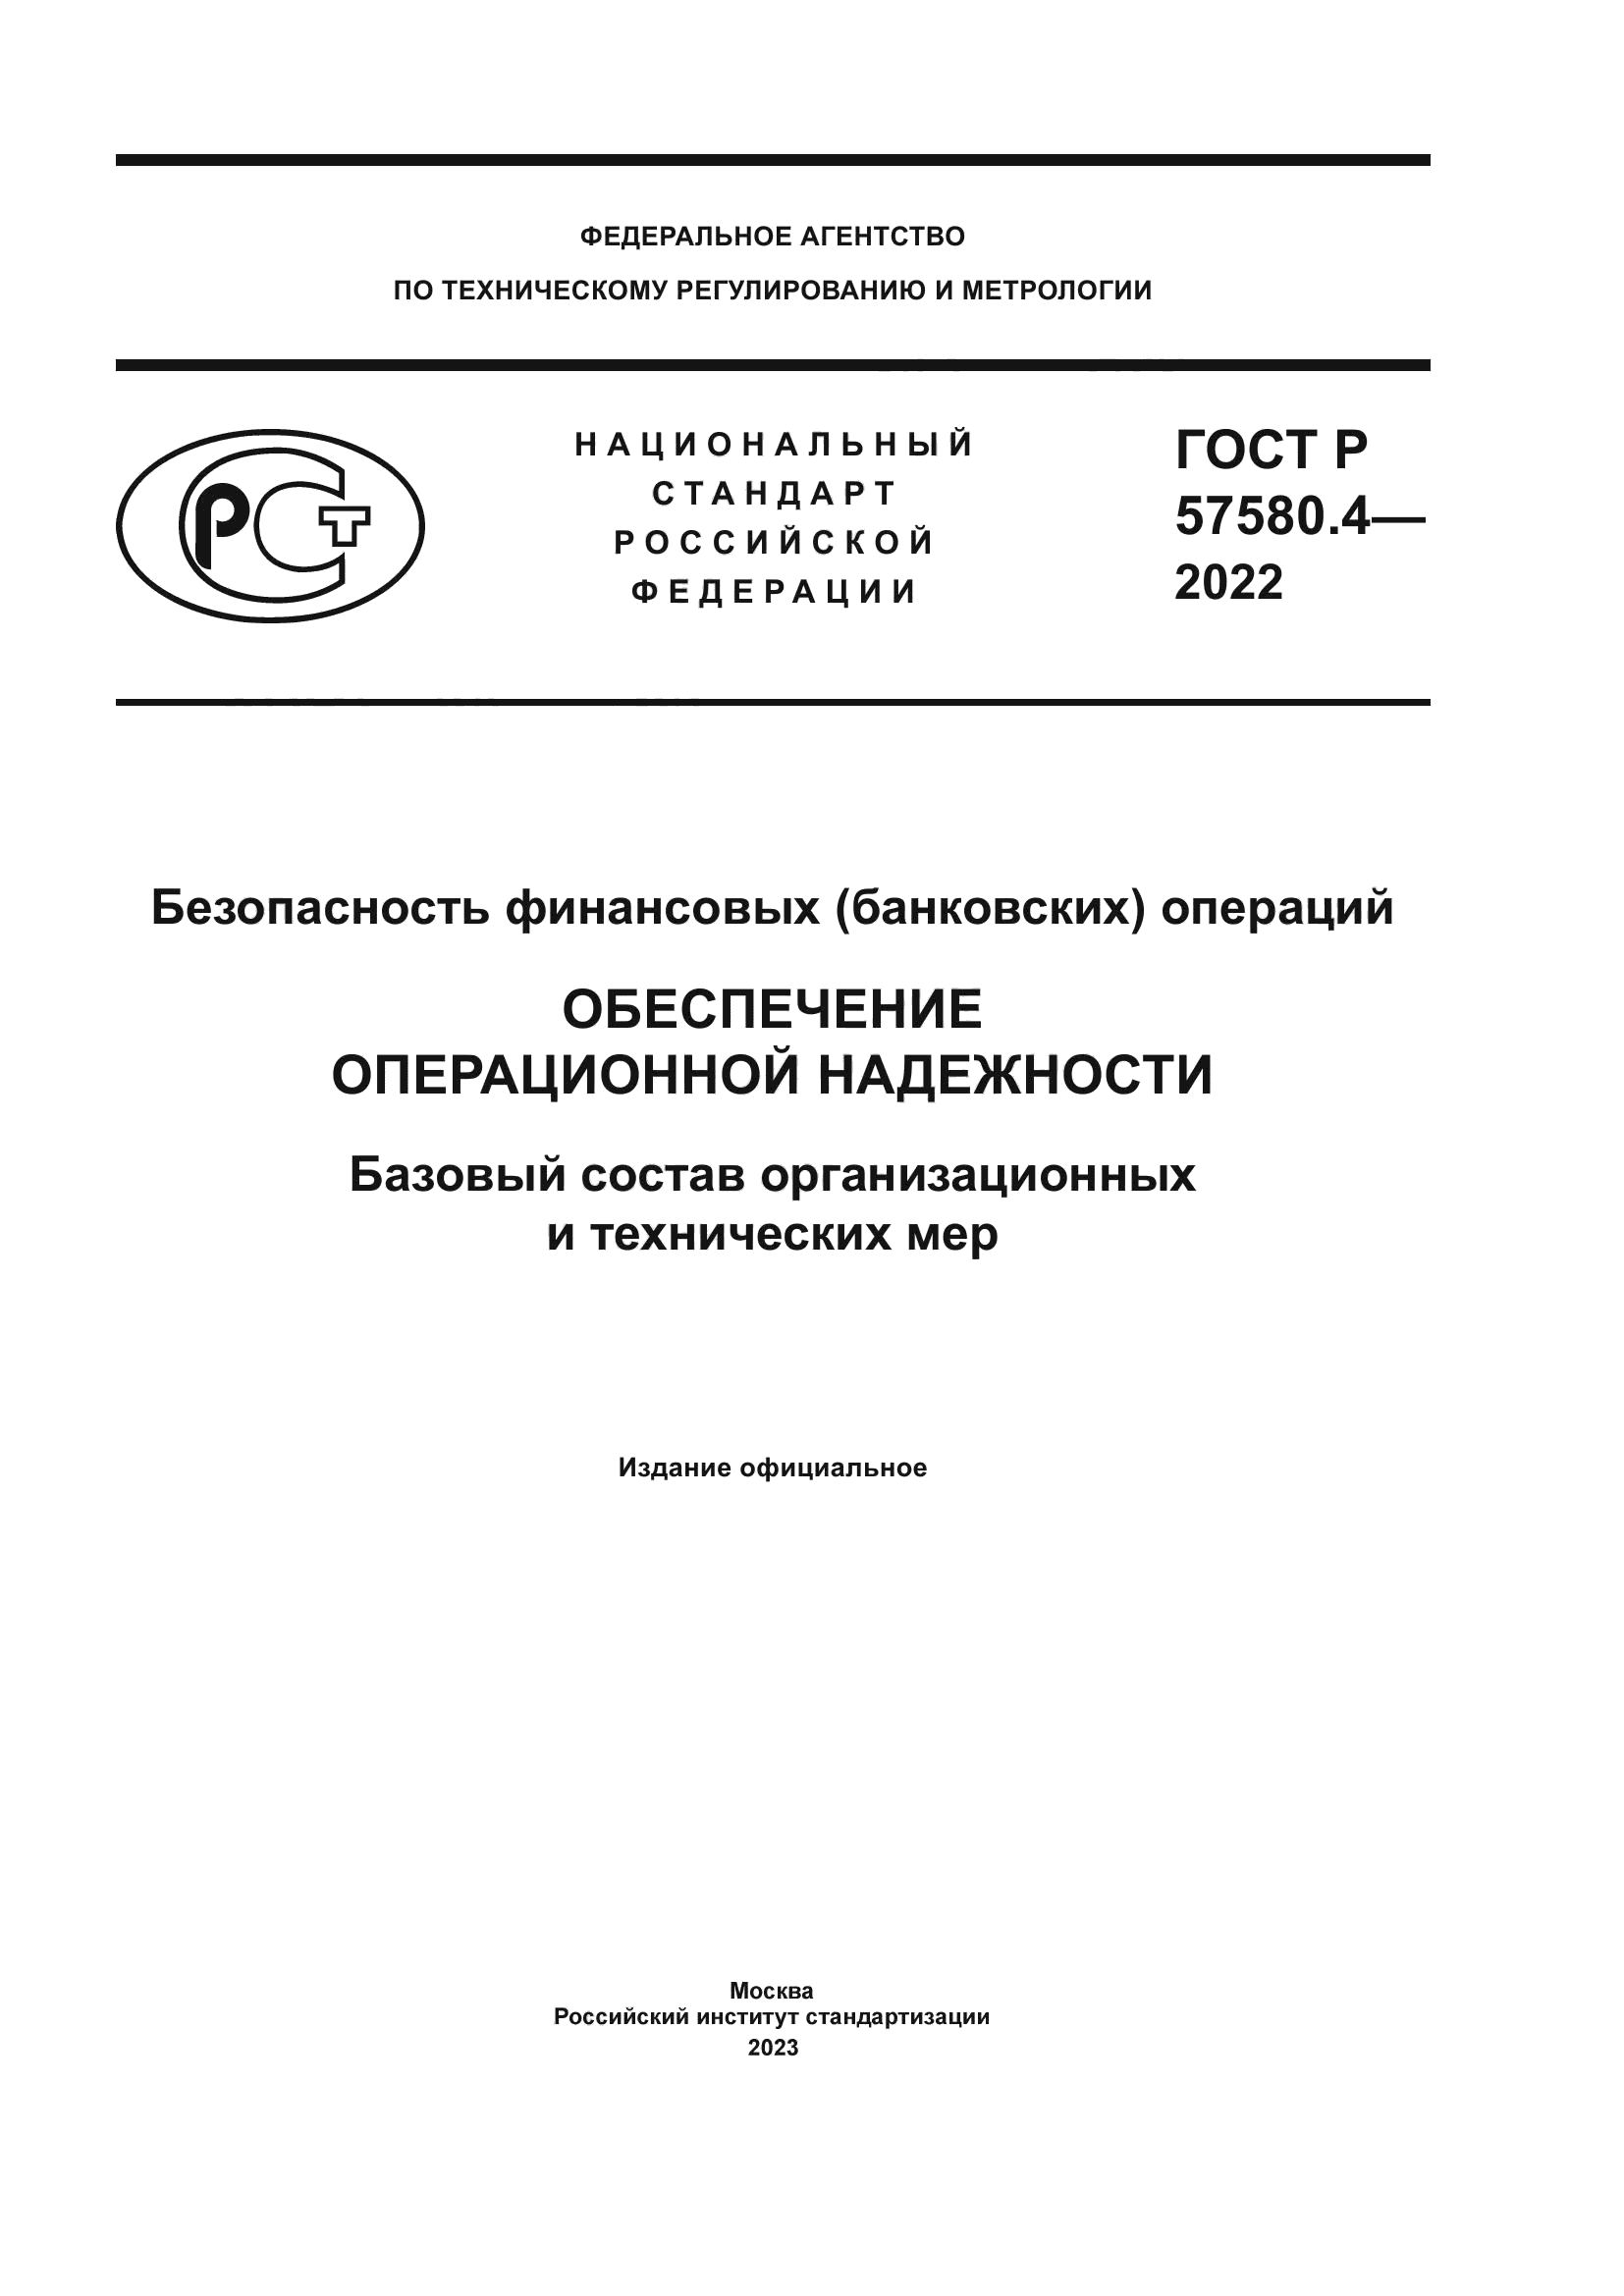 ГОСТ Р 57580.4-2022